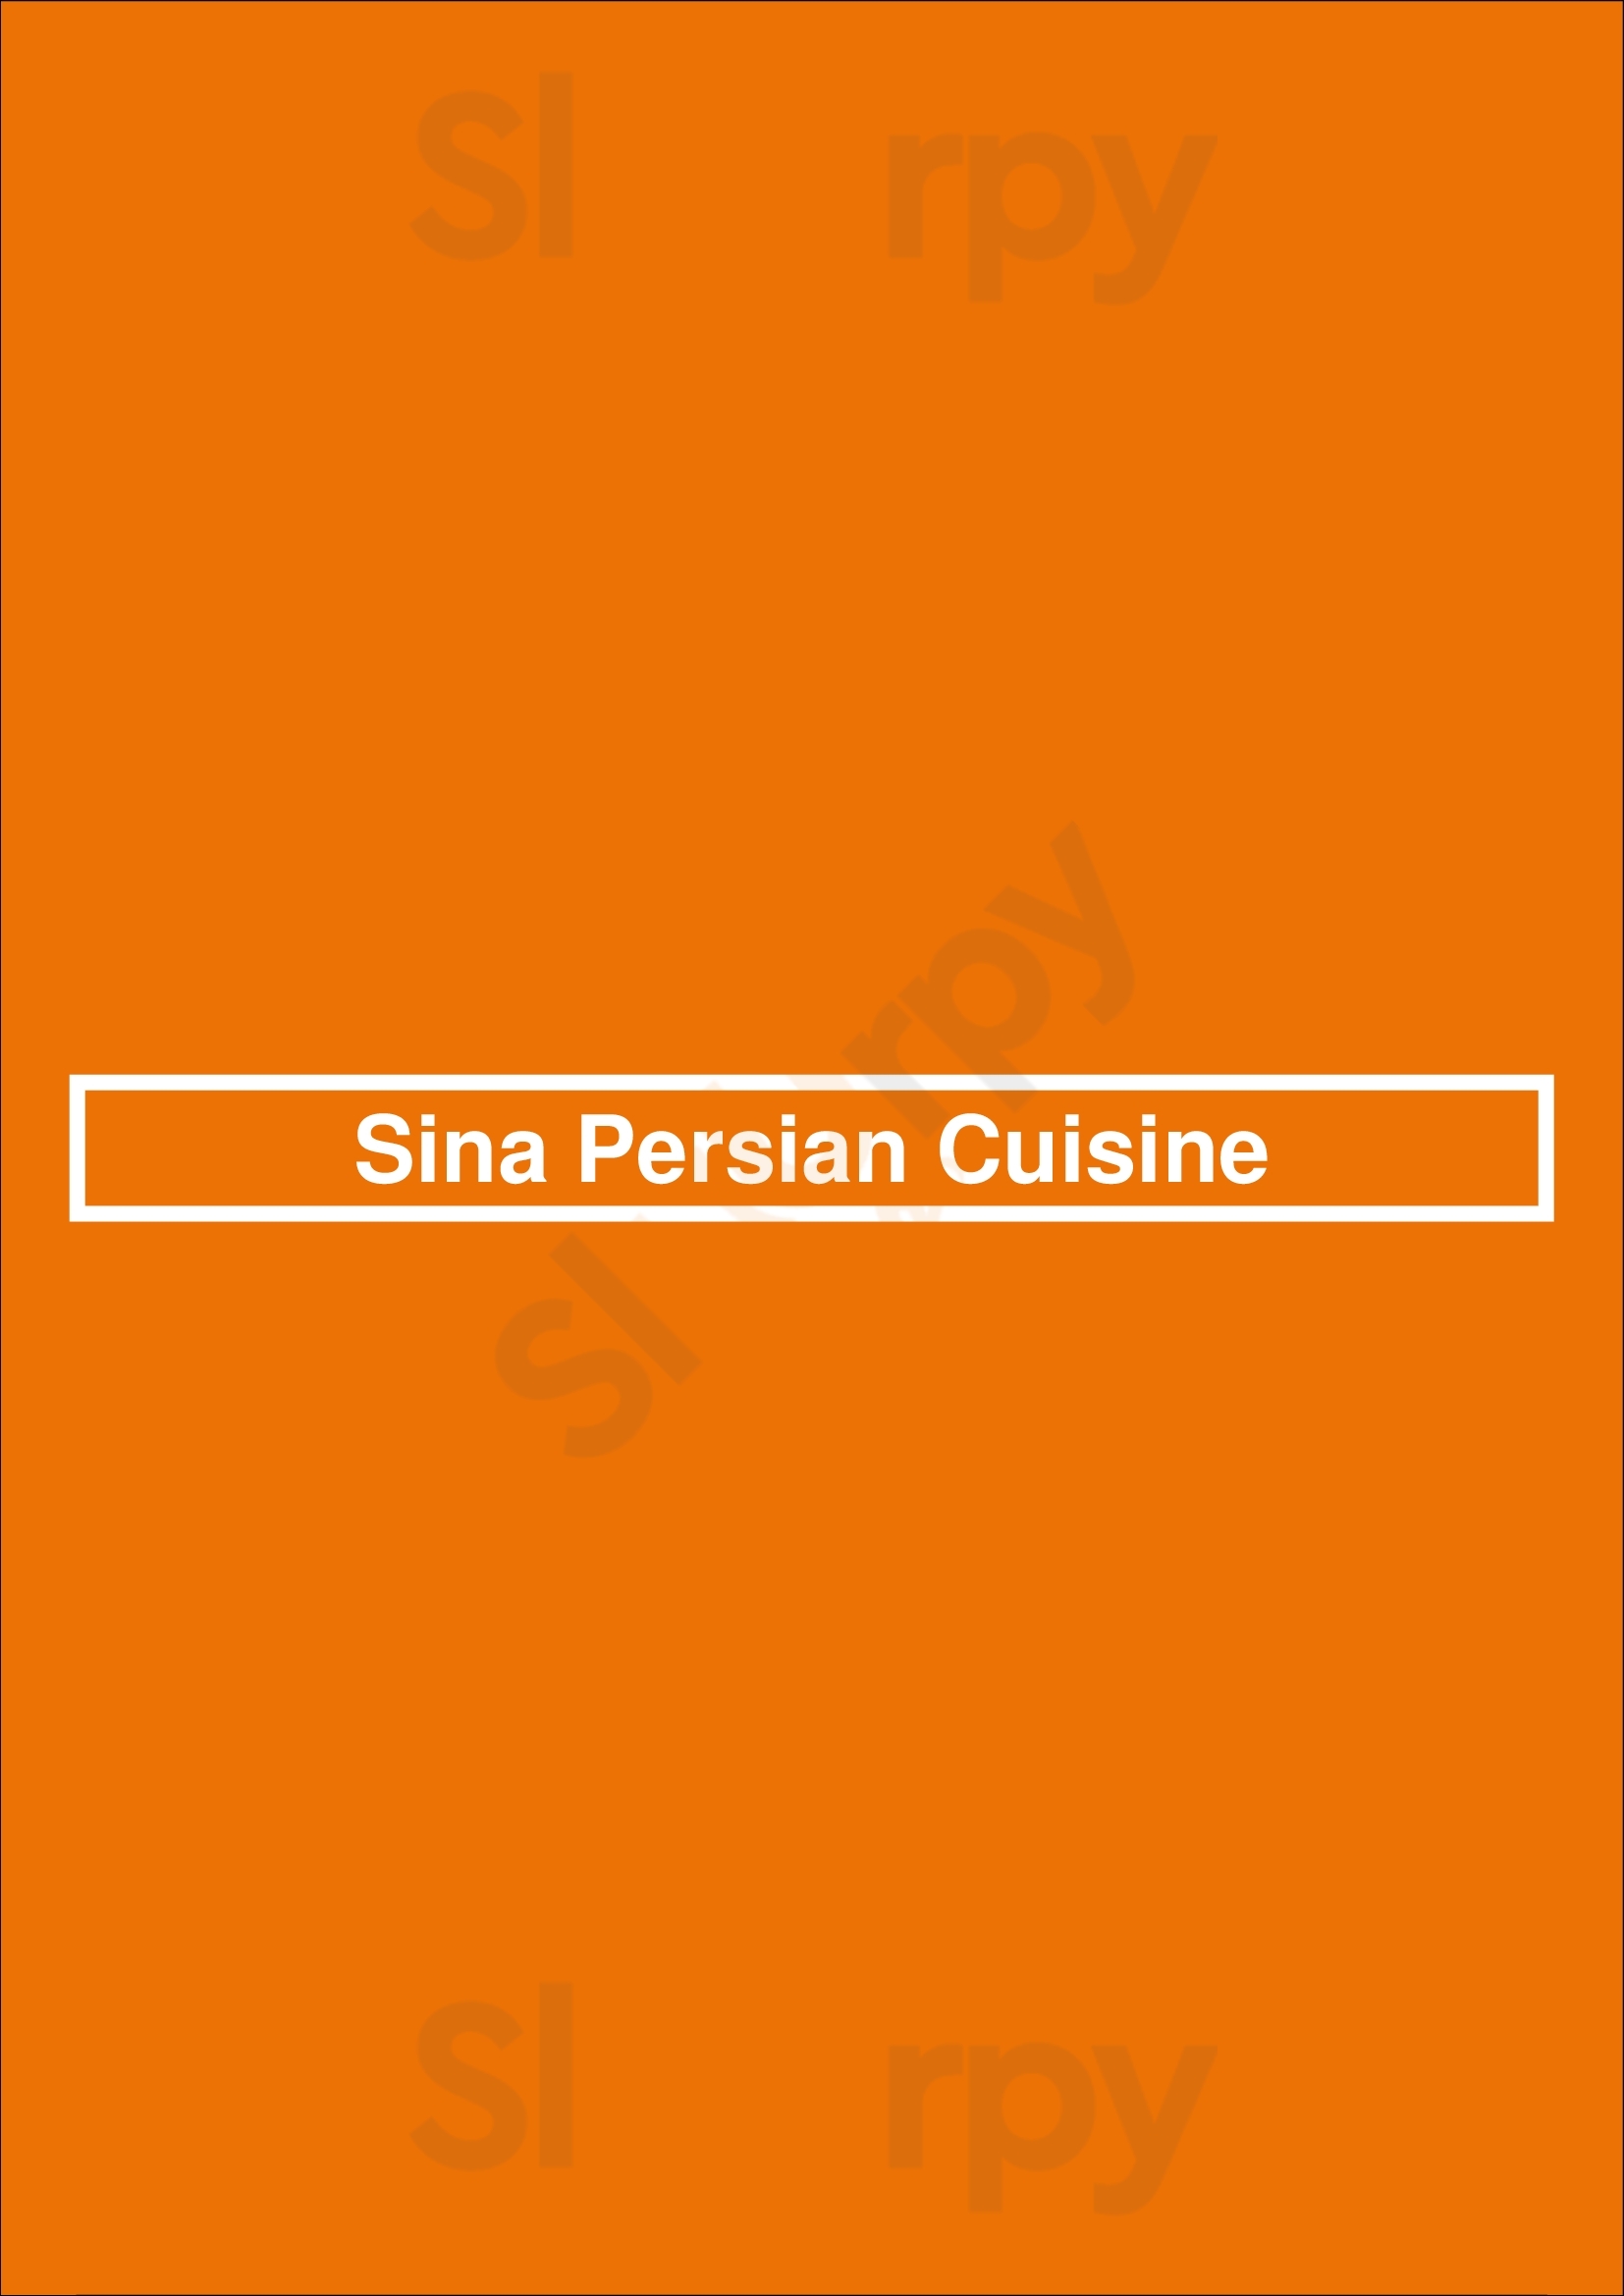 Sina Persian Cuisine Toronto Menu - 1